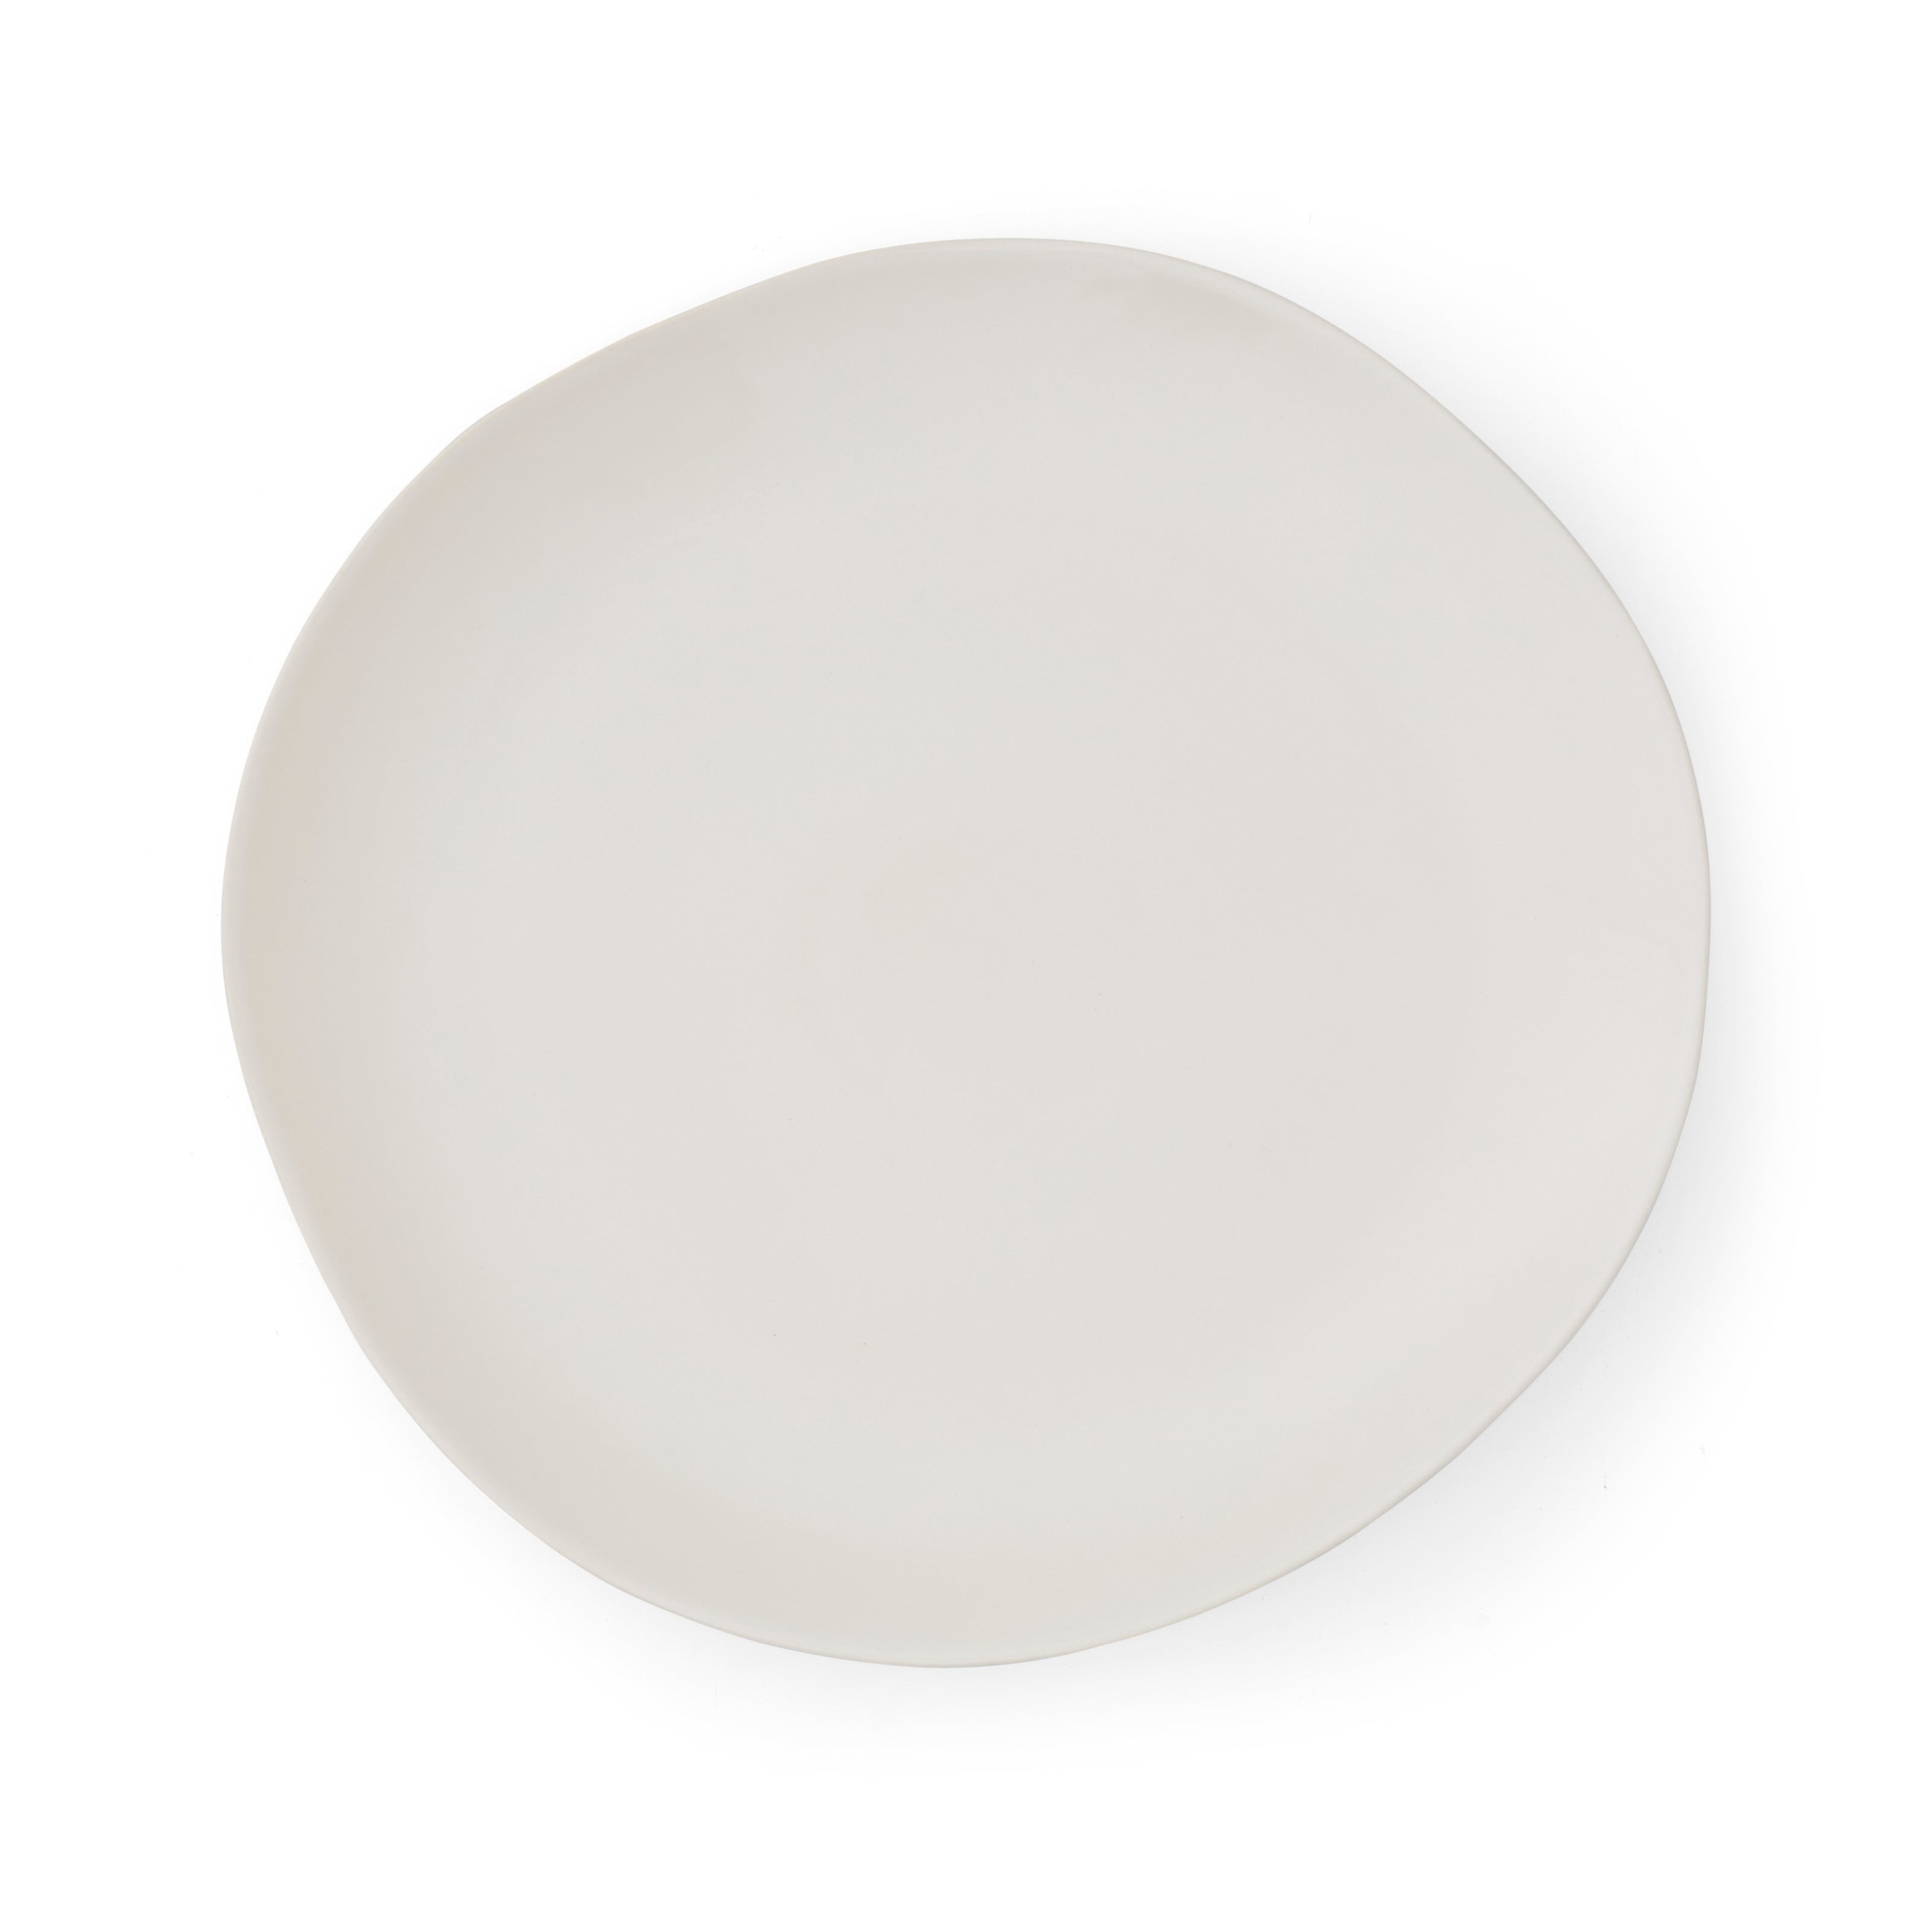 Photos - Serving Pieces Sophie Conran for Portmeirion Large Serving Platter White